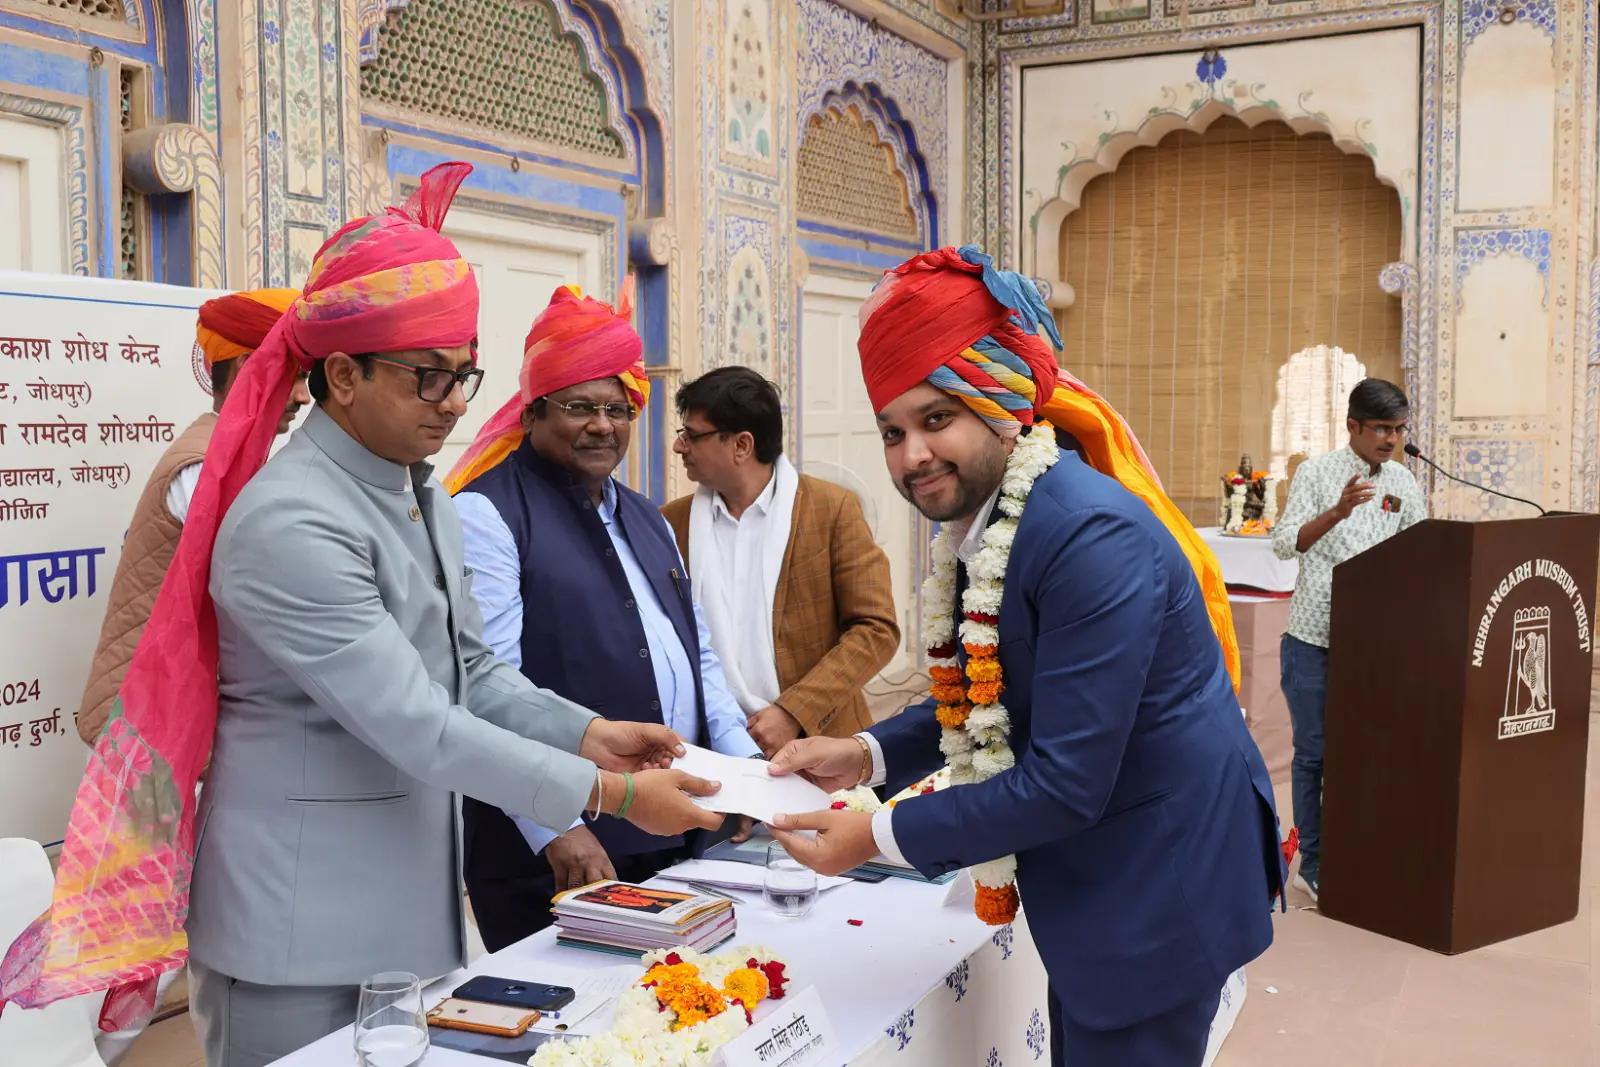 RJ Nikhil Rathore Honored with Inaugural 'Haji Zafar Khan Sindhi Rajasthani Award'